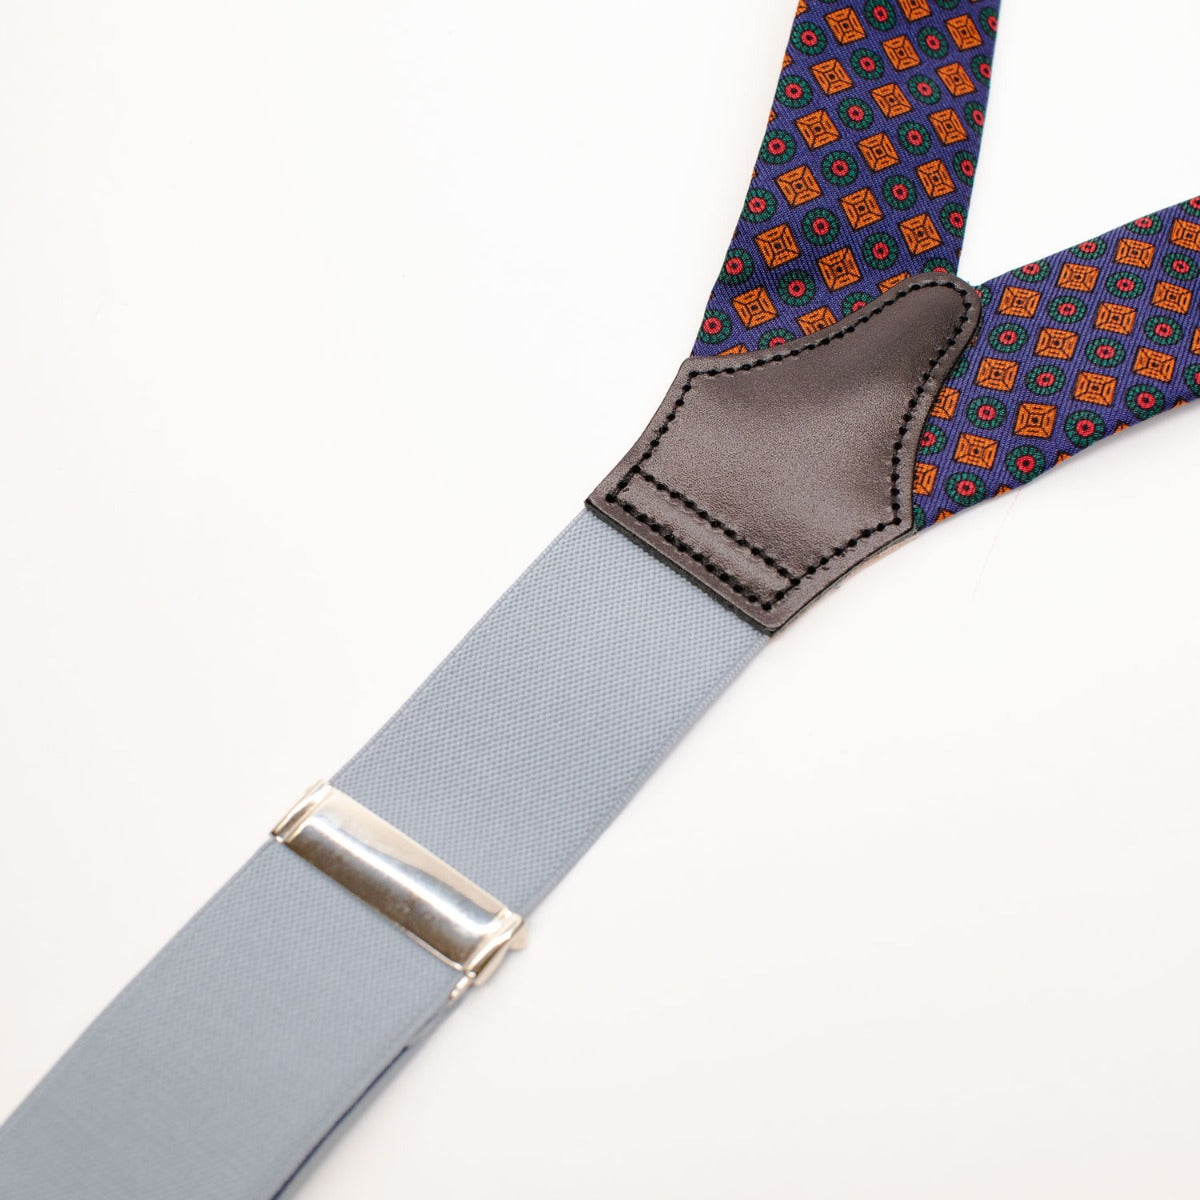 An adjustable pair of Sovereign Grade Solid Tartan Braces from KirbyAllison.com.